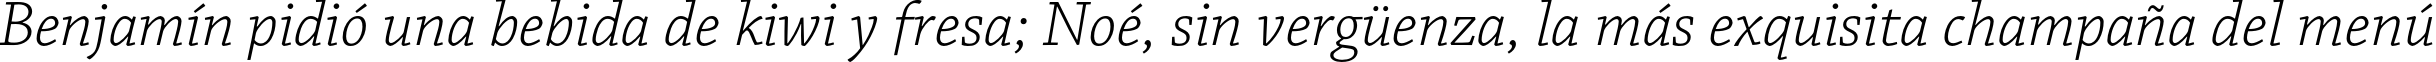 Пример написания шрифтом Chaparral Pro Light Italic текста на испанском